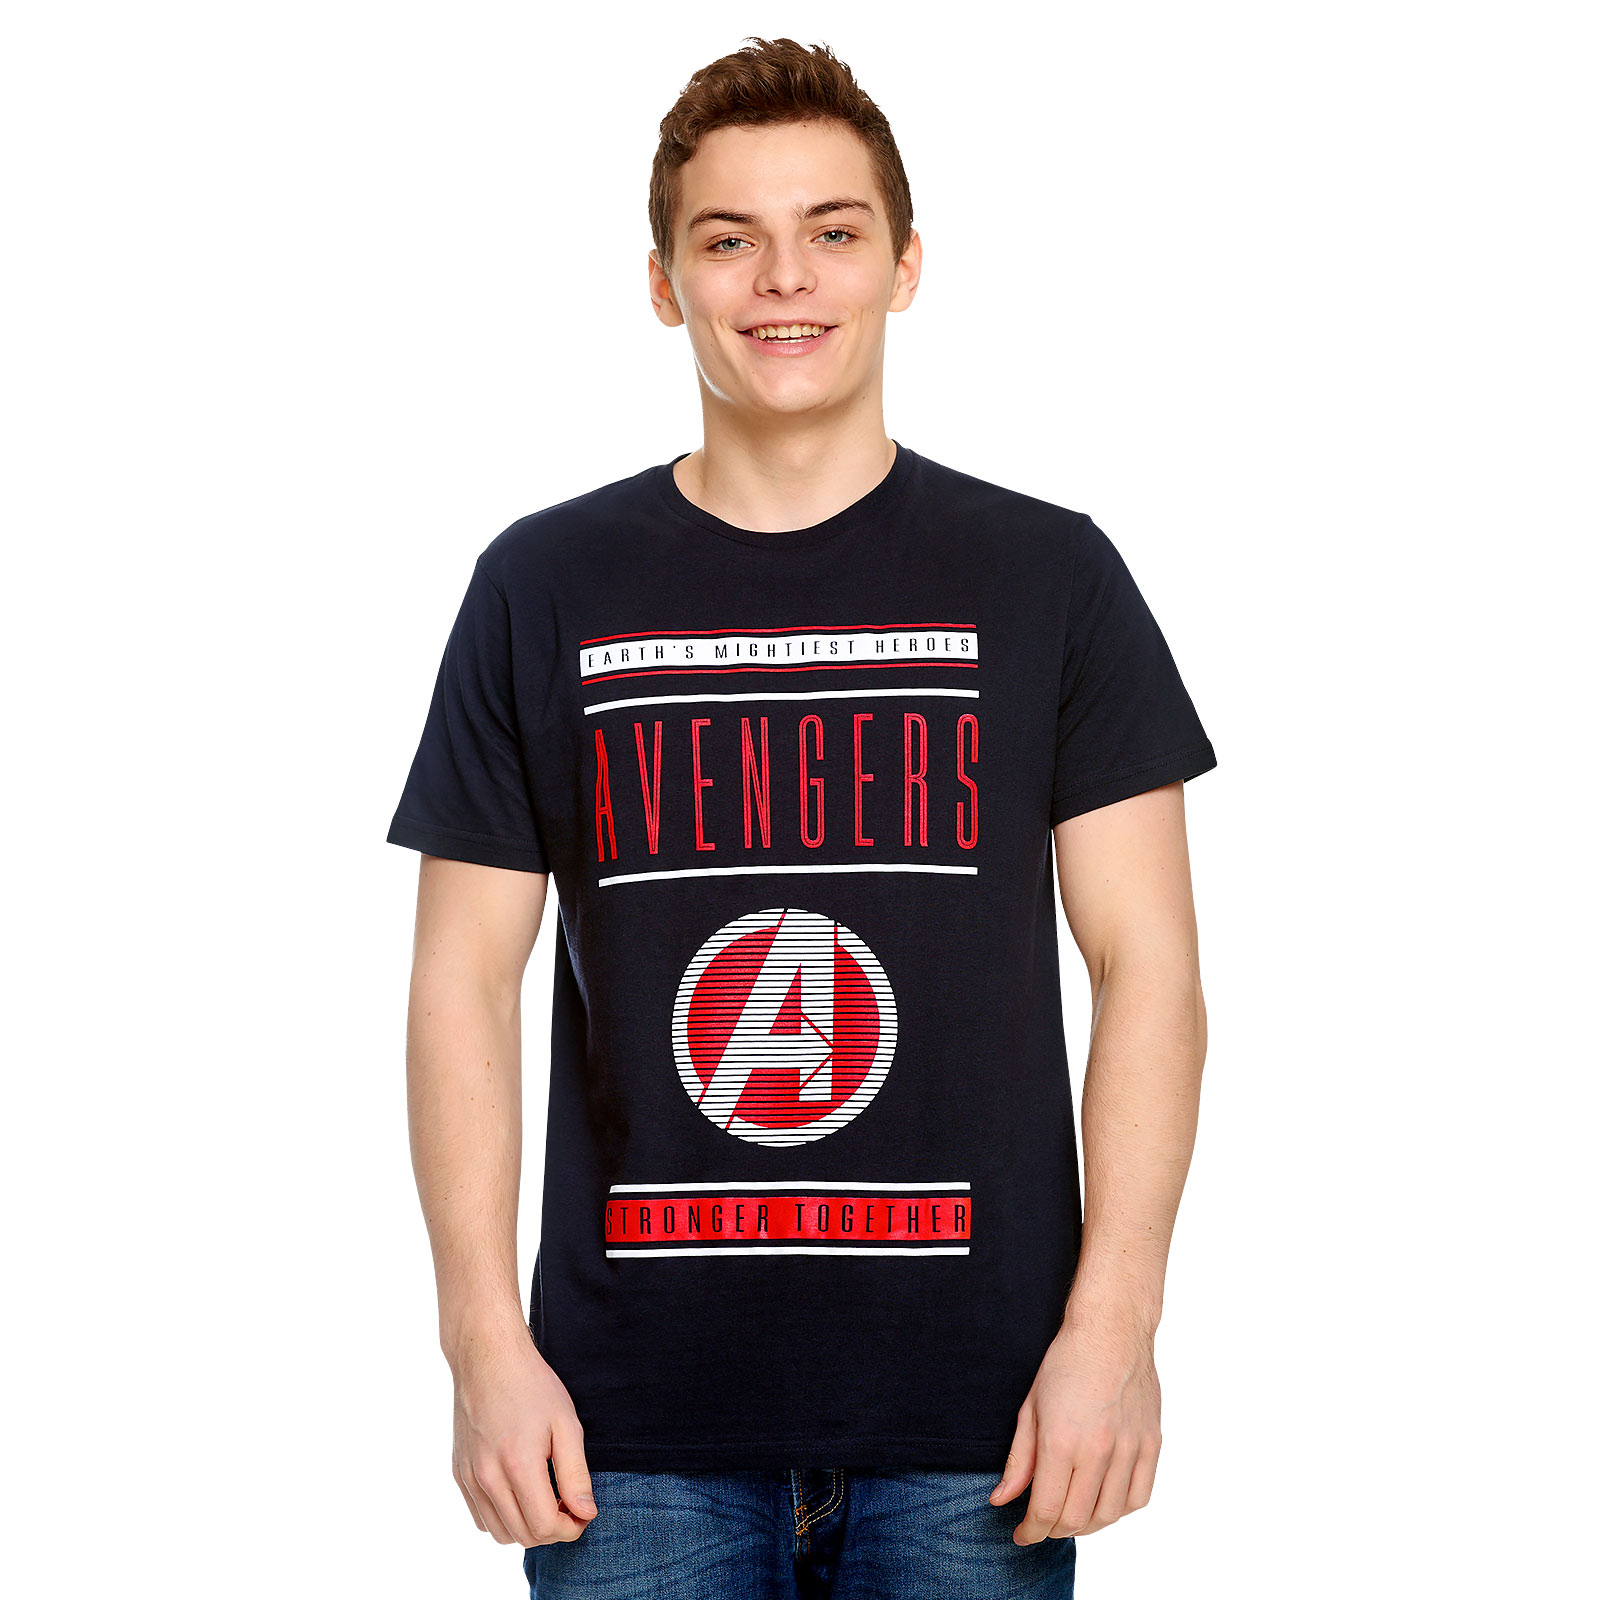 Avengers - Stronger Together T-Shirt blue